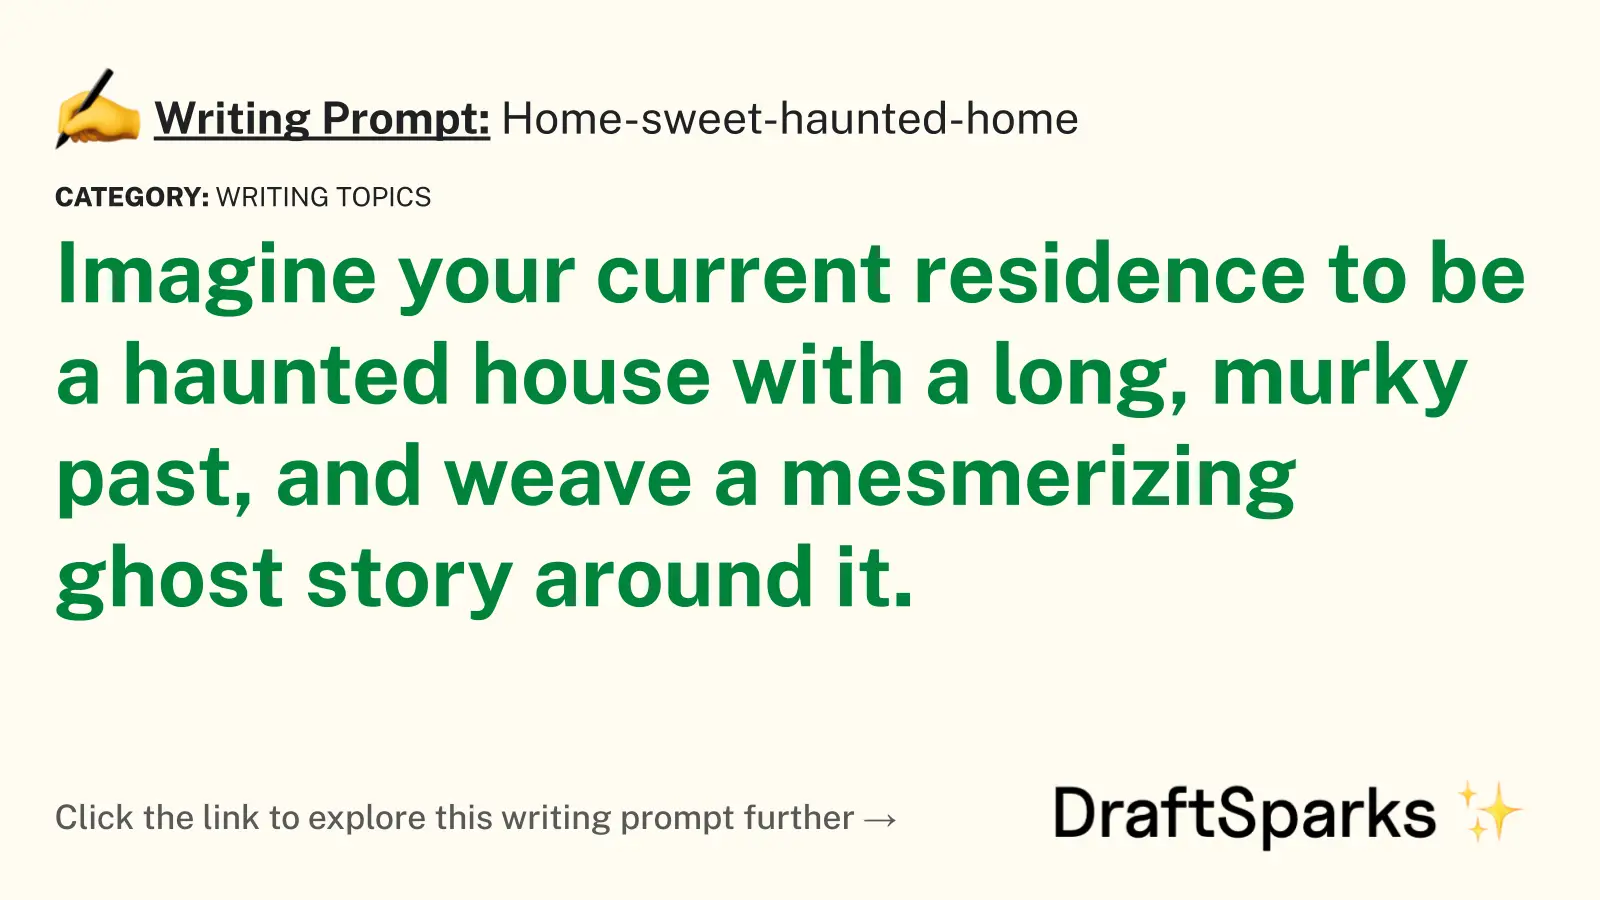 Home-sweet-haunted-home